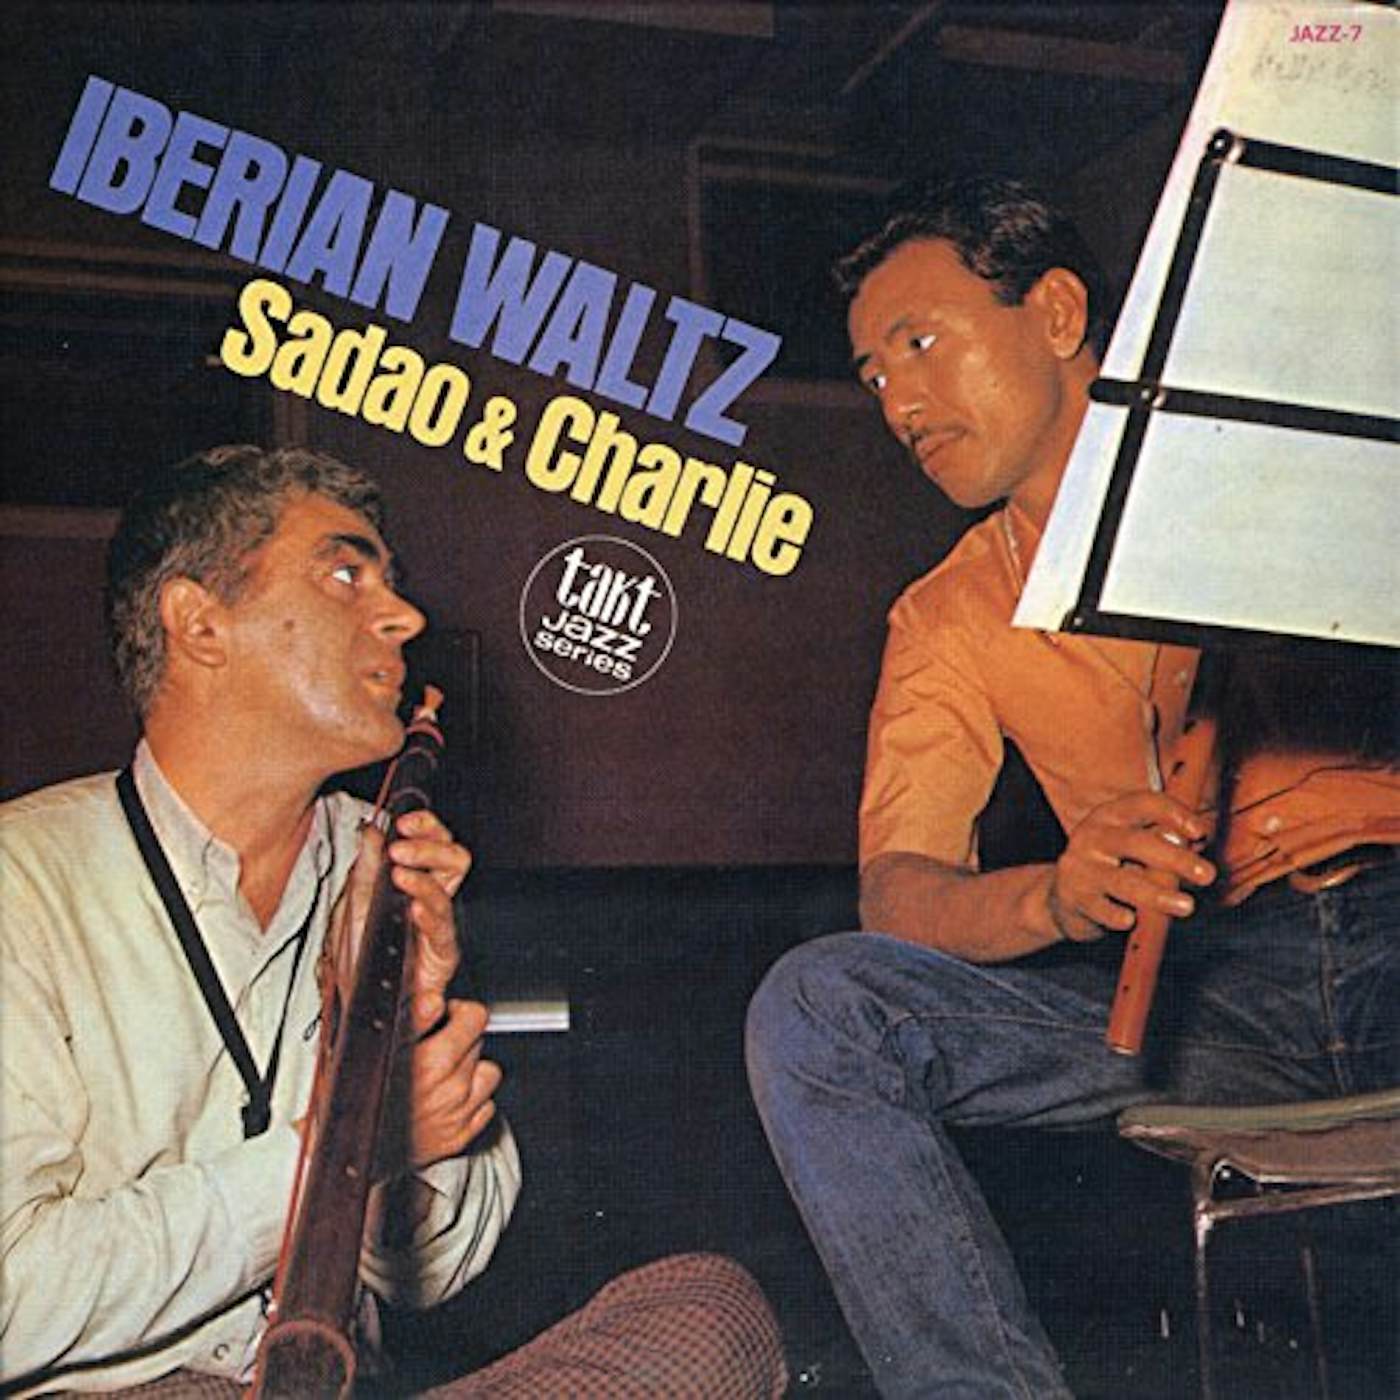 Sadao Watanabe IBERIAN WALTZ CD